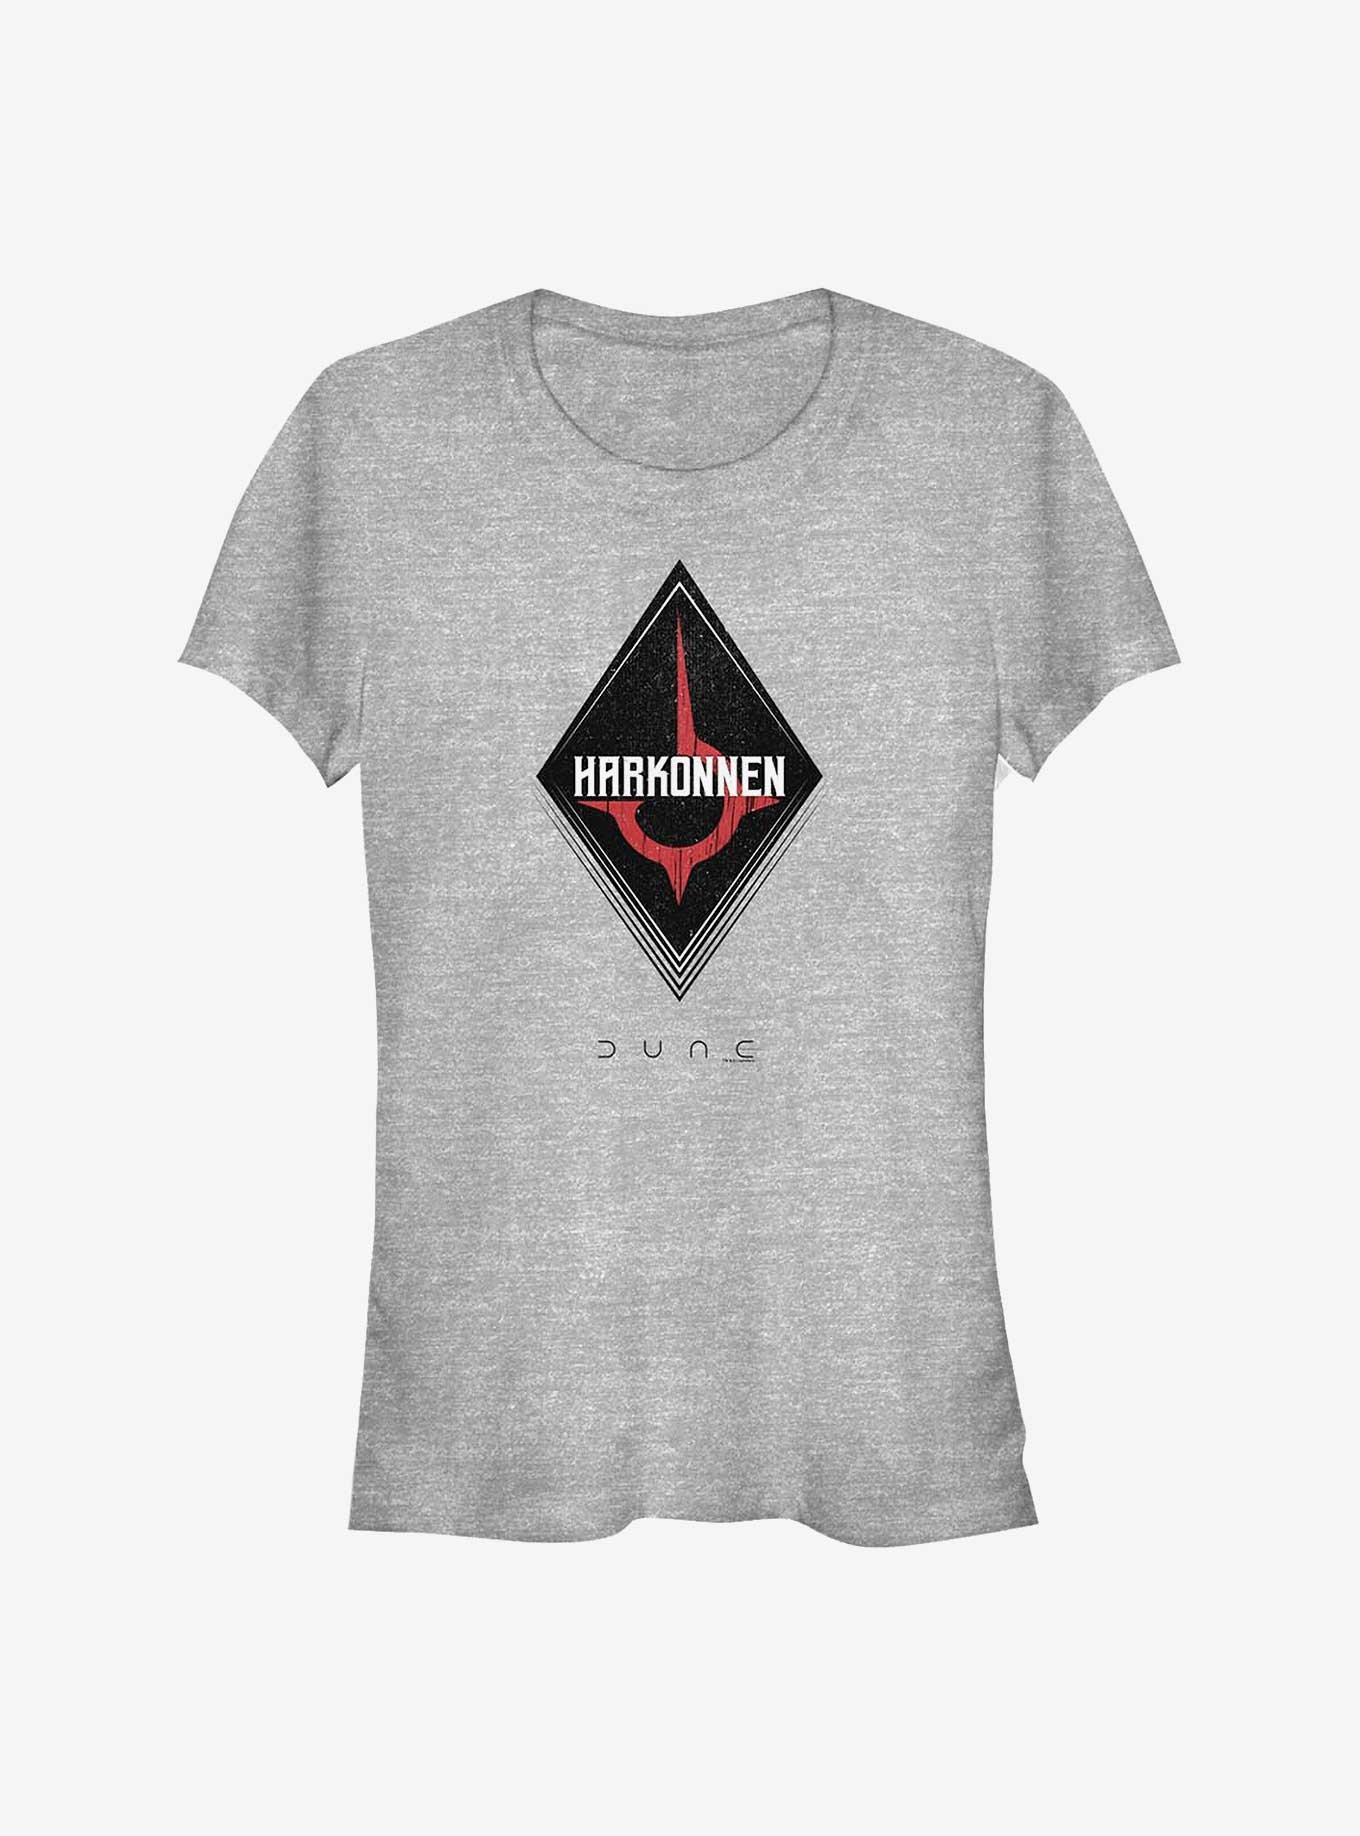 Dune Harkonnen Emblem Girls T-Shirt, ATH HTR, hi-res